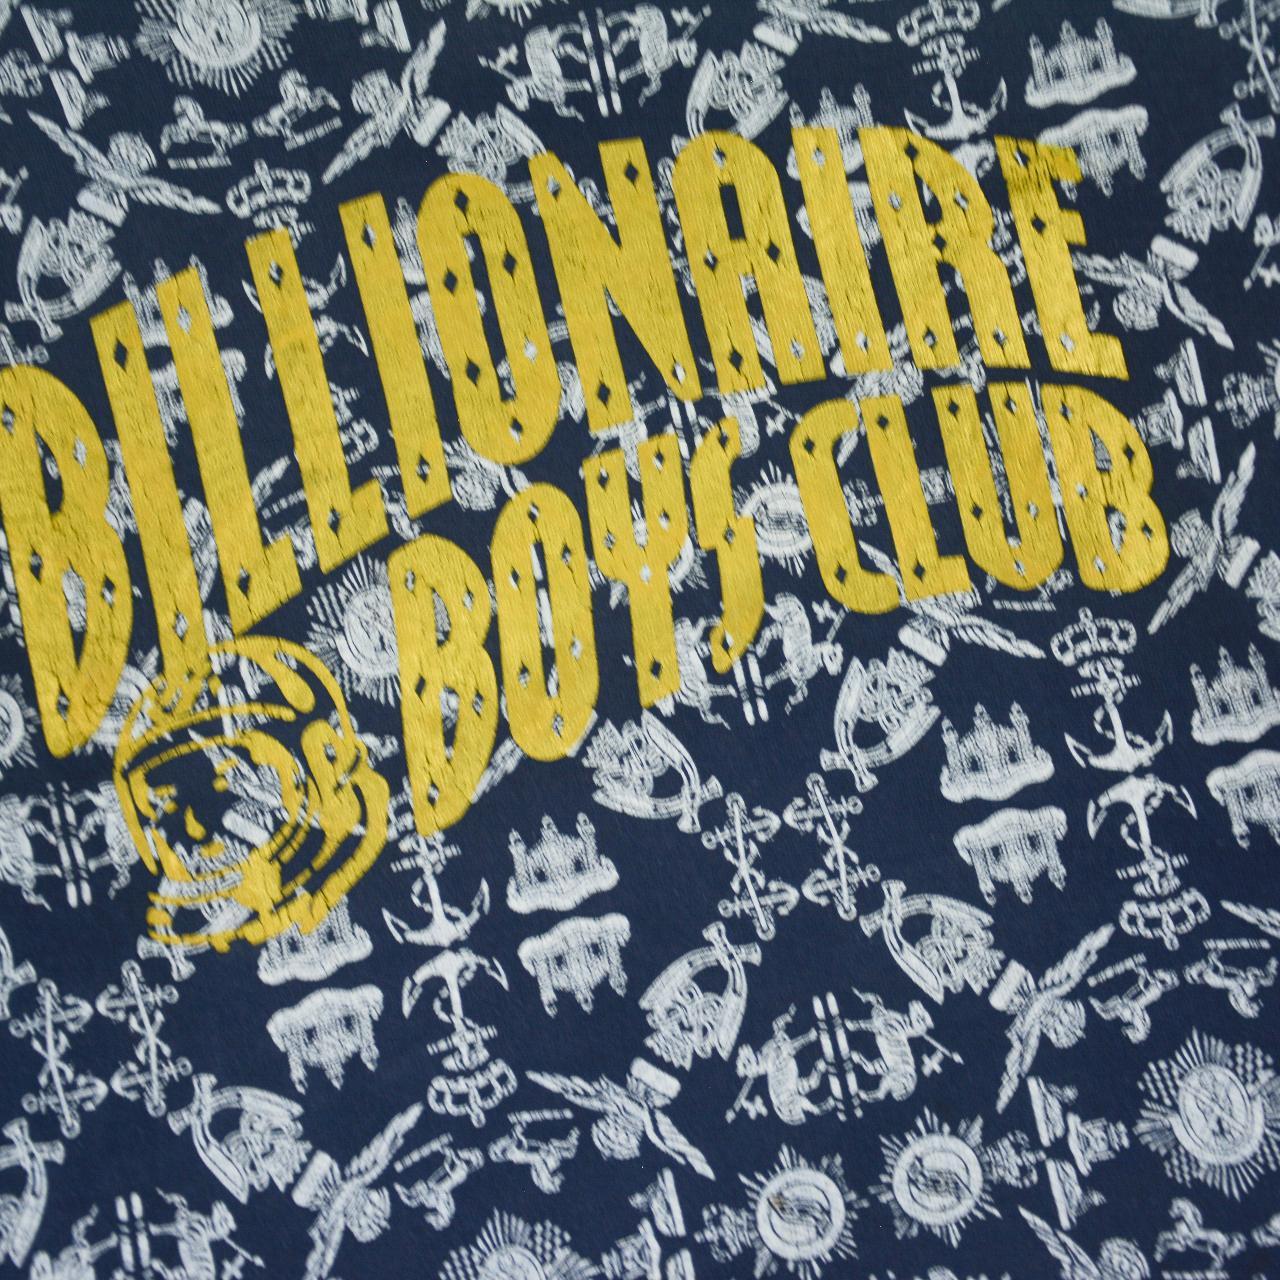 BBC Billionaire Boys Club Sweatshirt Size S